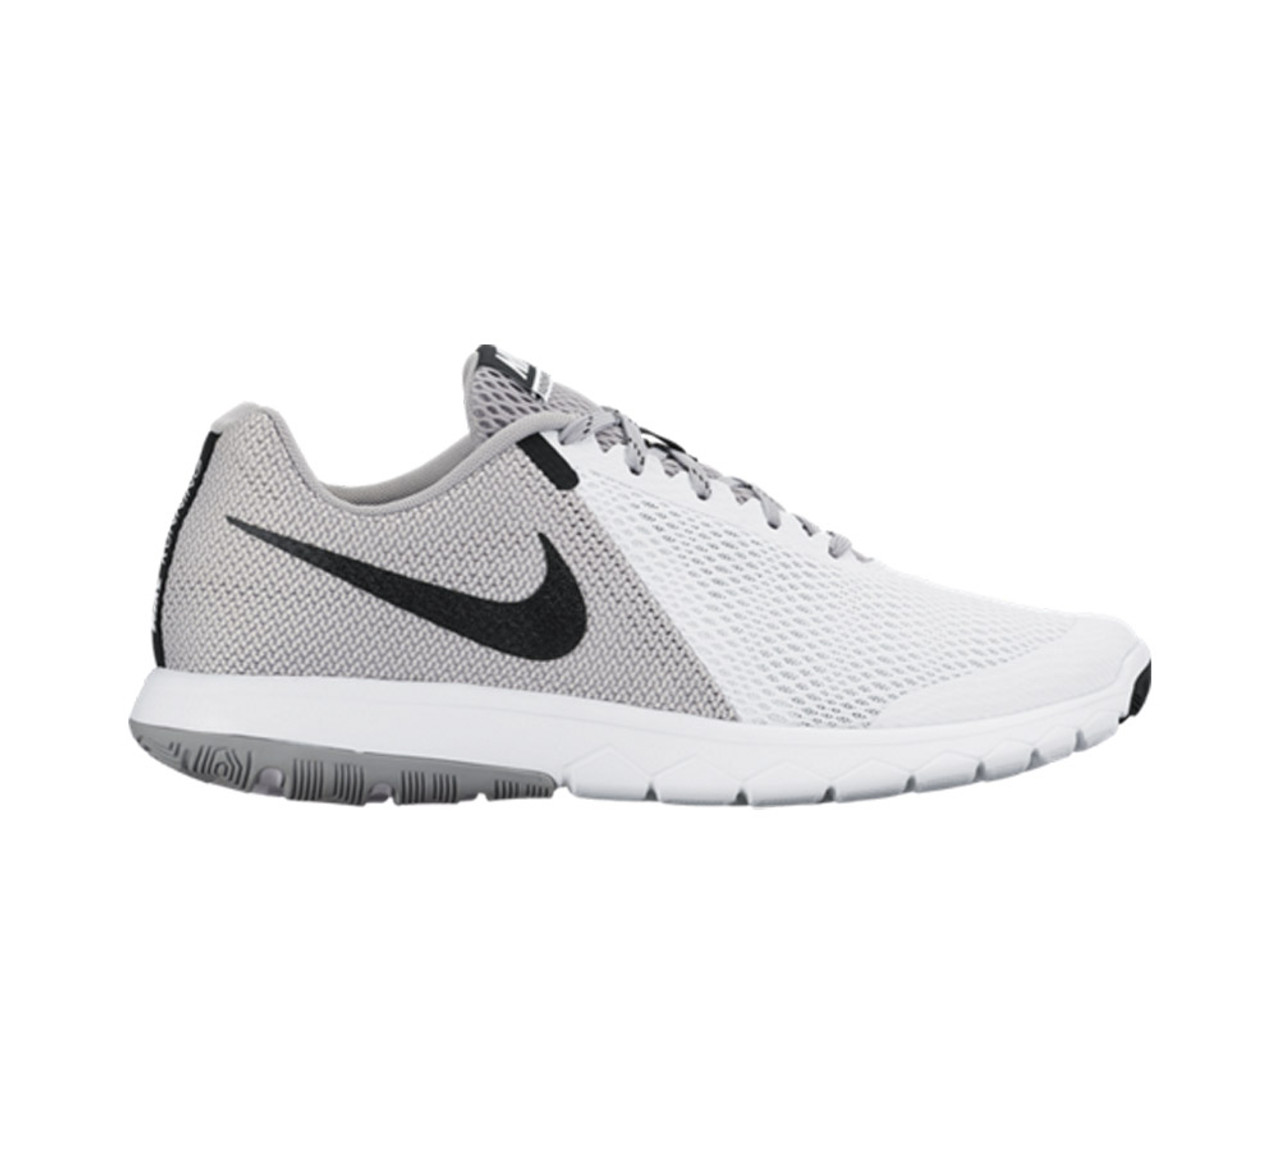 Nike Men's Flex Experience RN Running Shoe - White | Discount Nike Men's Athletic & More Shoolu.com | Shoolu.com